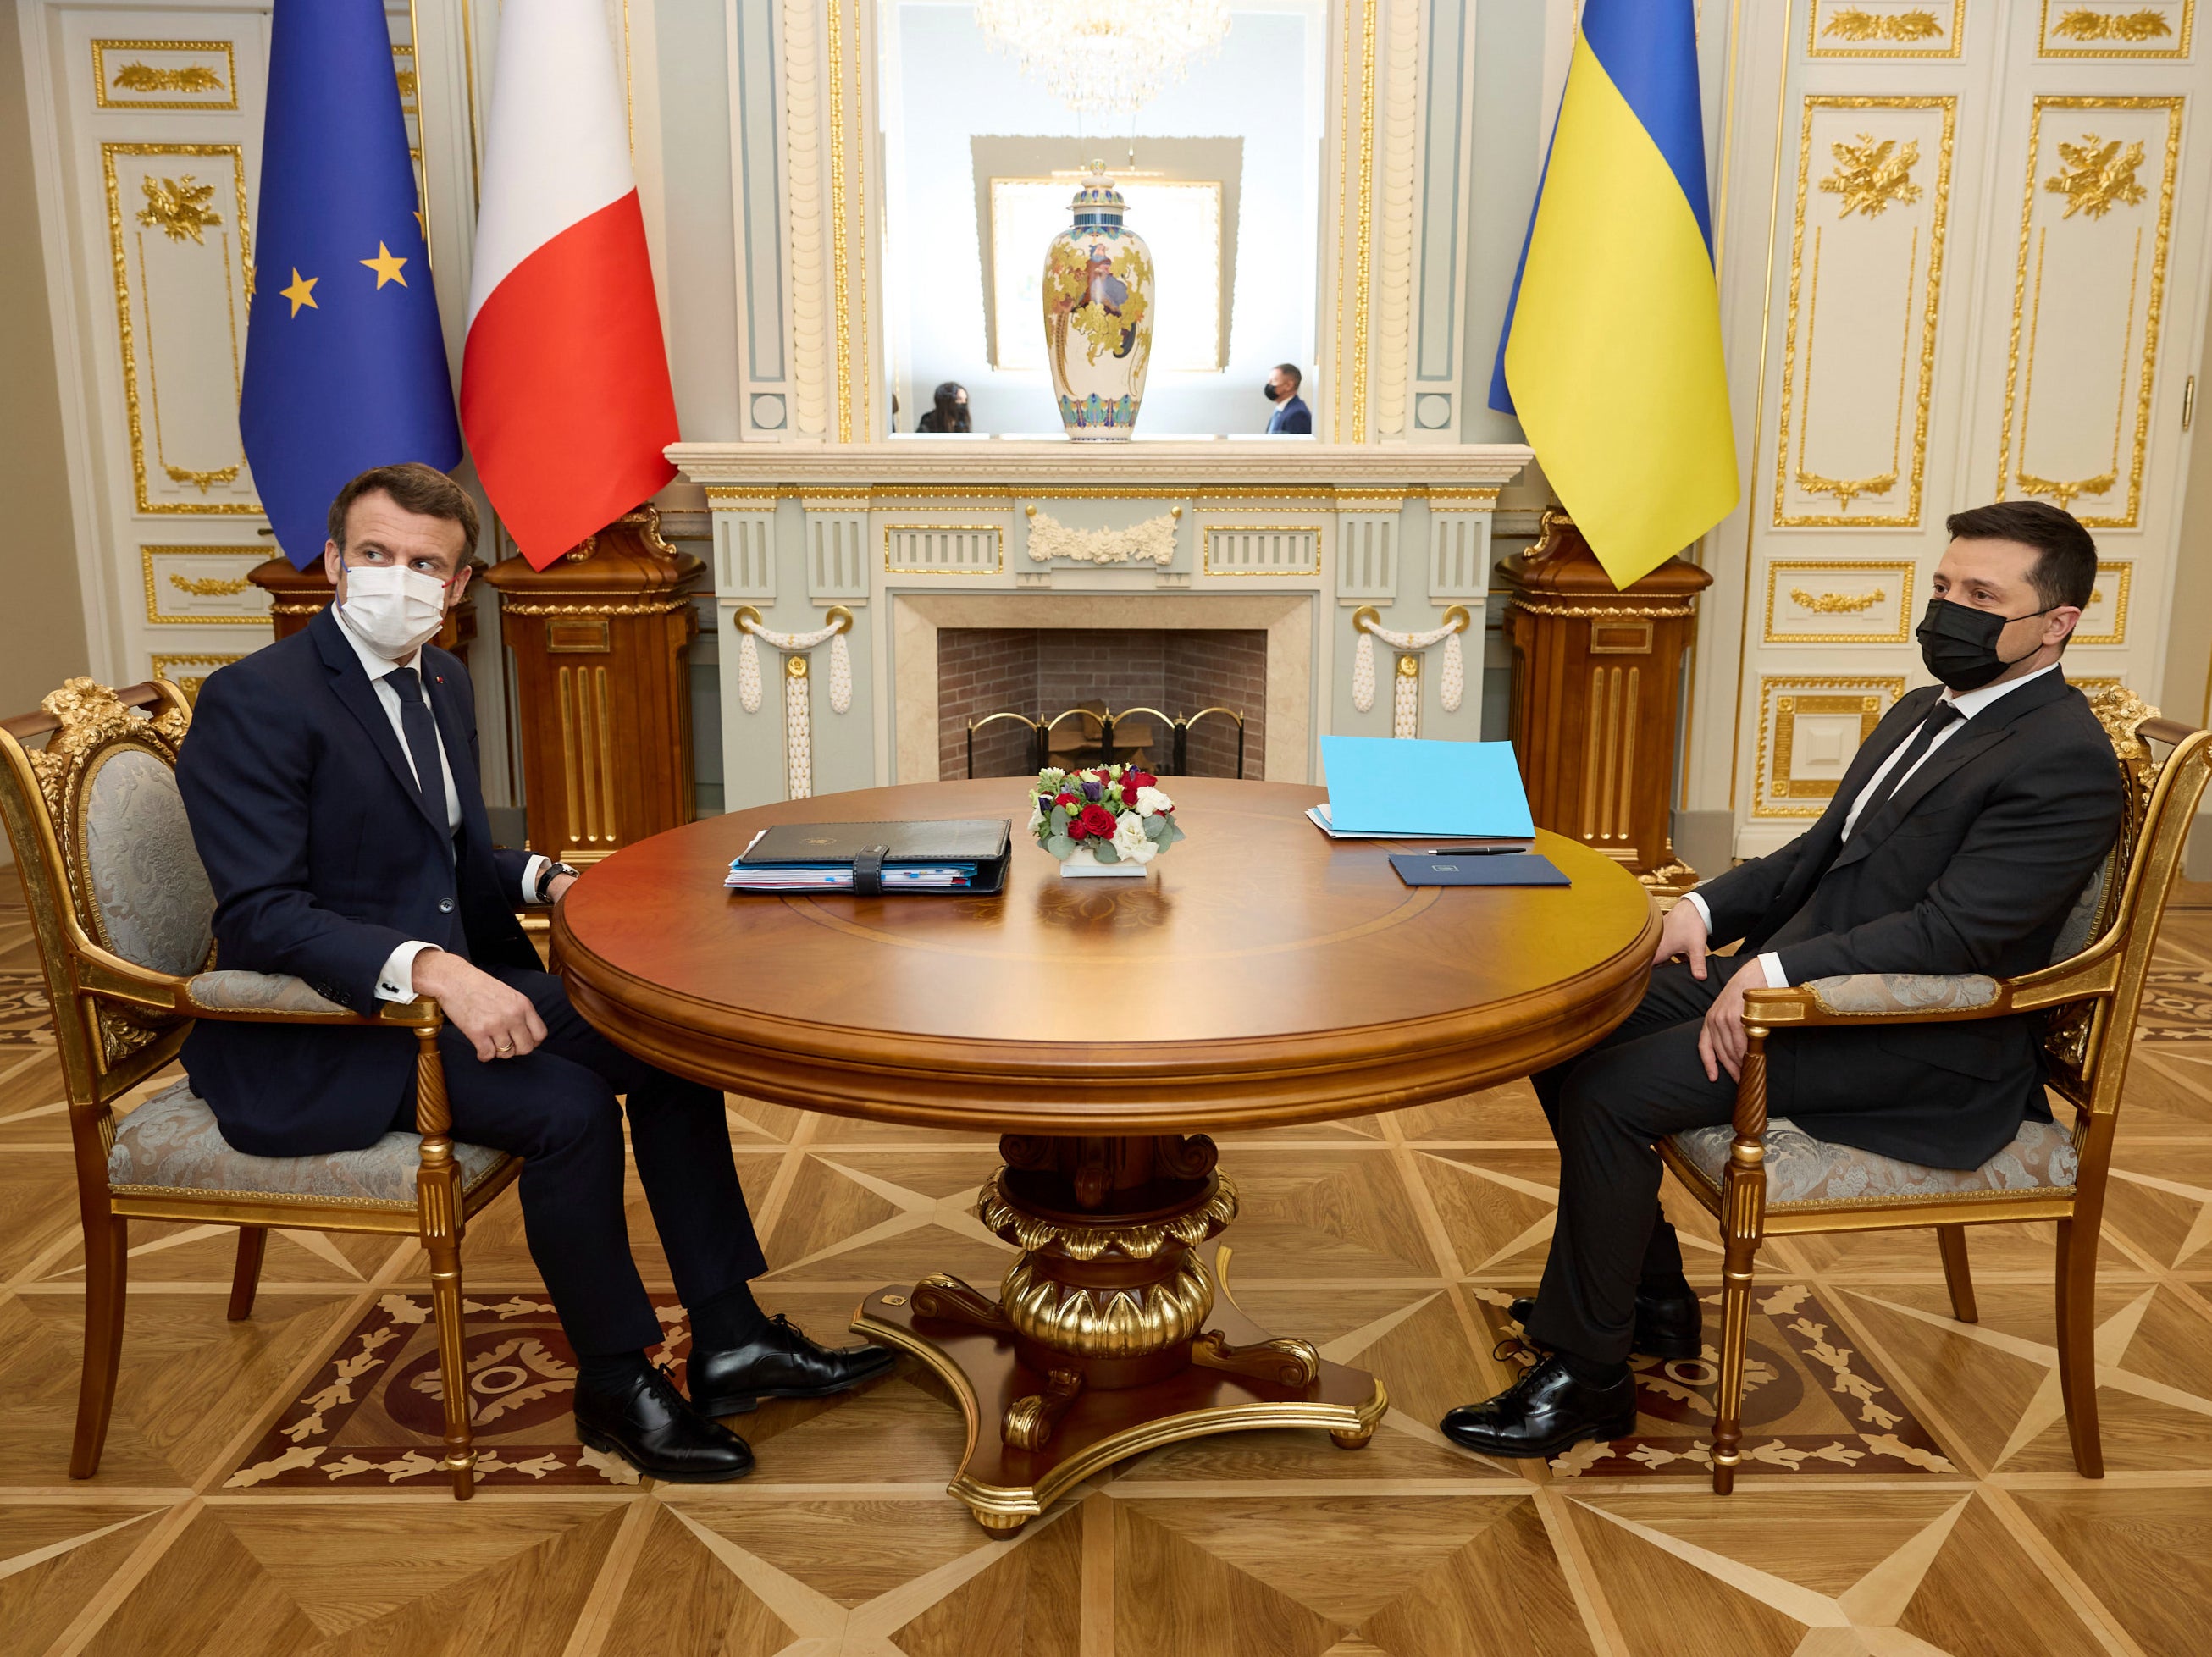 Volodymyr Zelenskyy meets Emmanuel Macron in Kiev yesterday